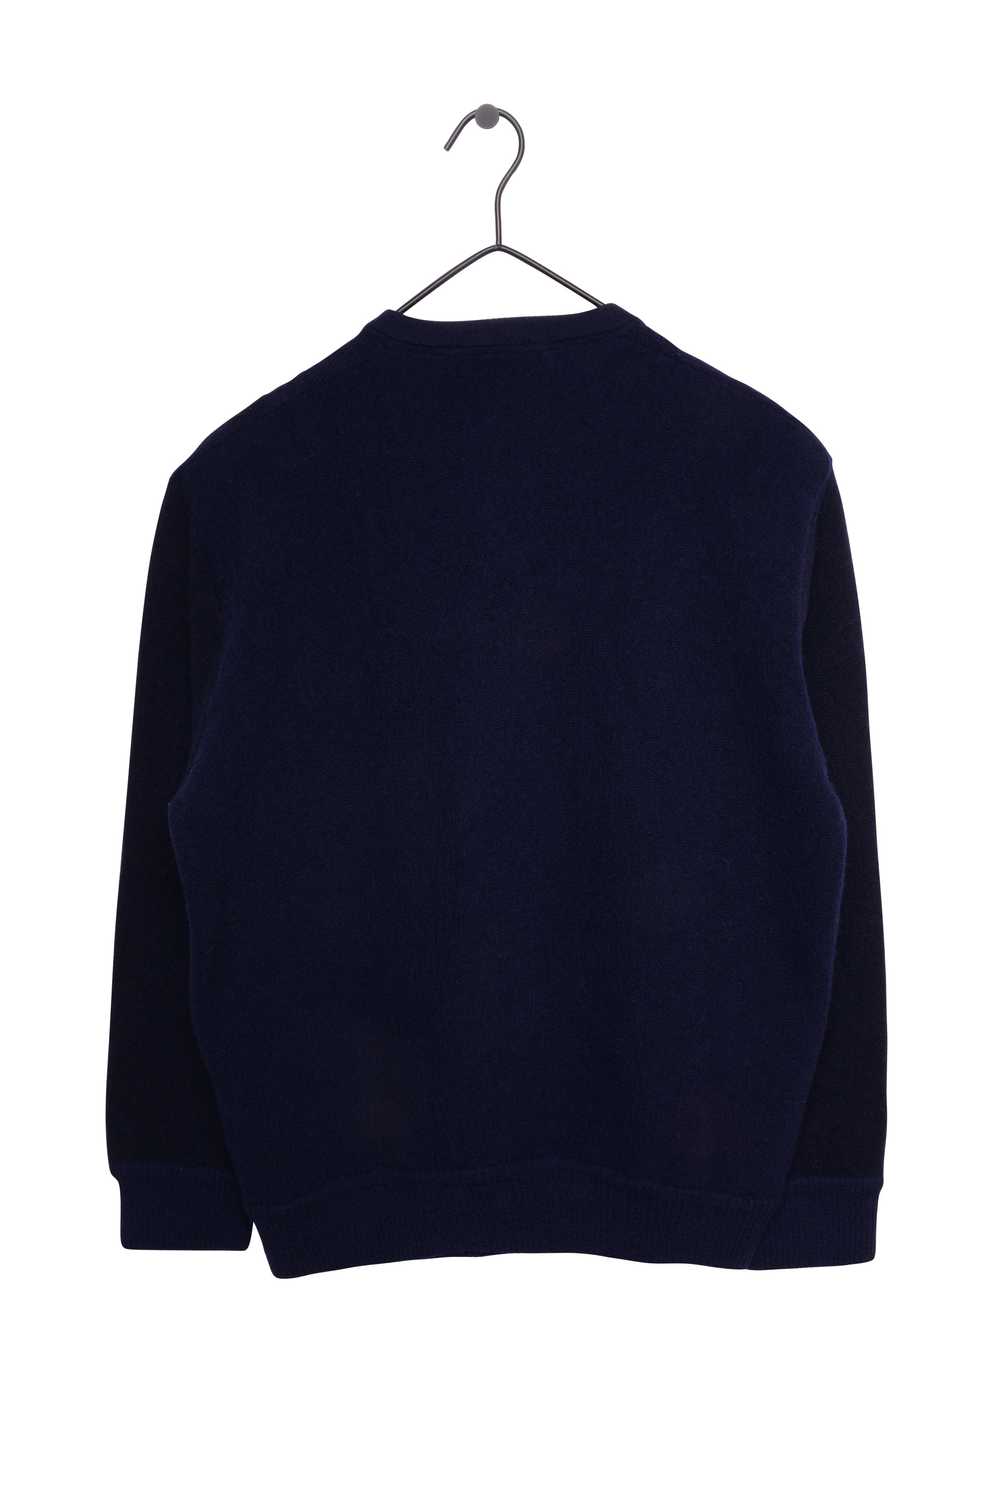 Navy Wool Sweater - image 3